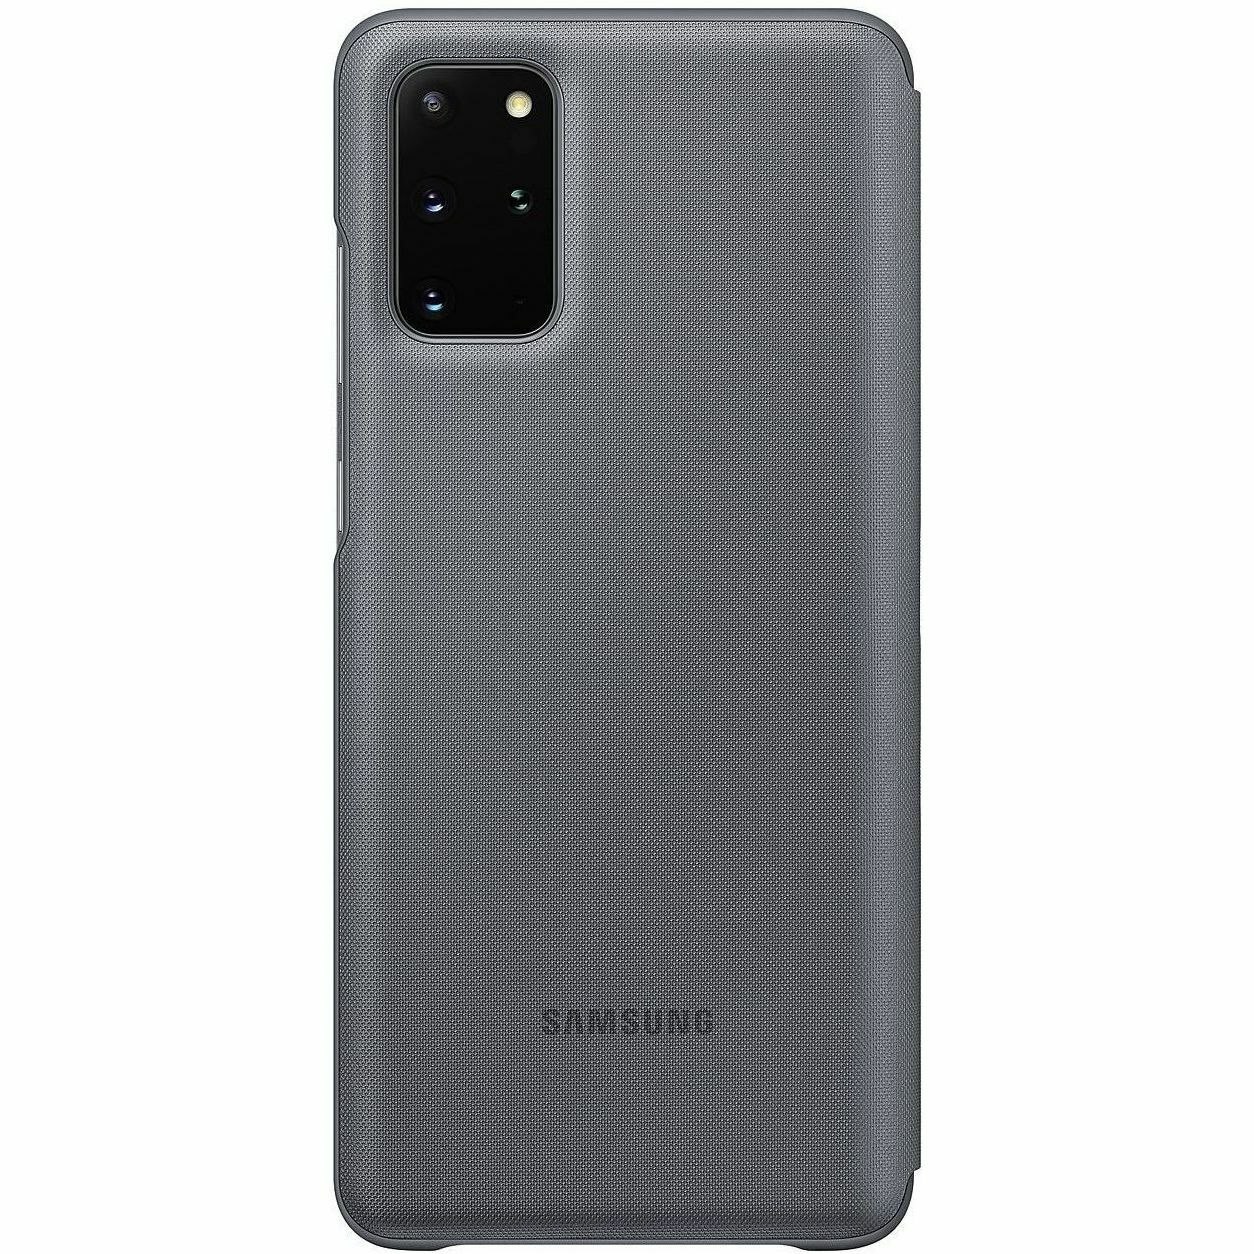 Samsung EF-NG985 Carrying Case Samsung Galaxy S20+ 5G Smartphone